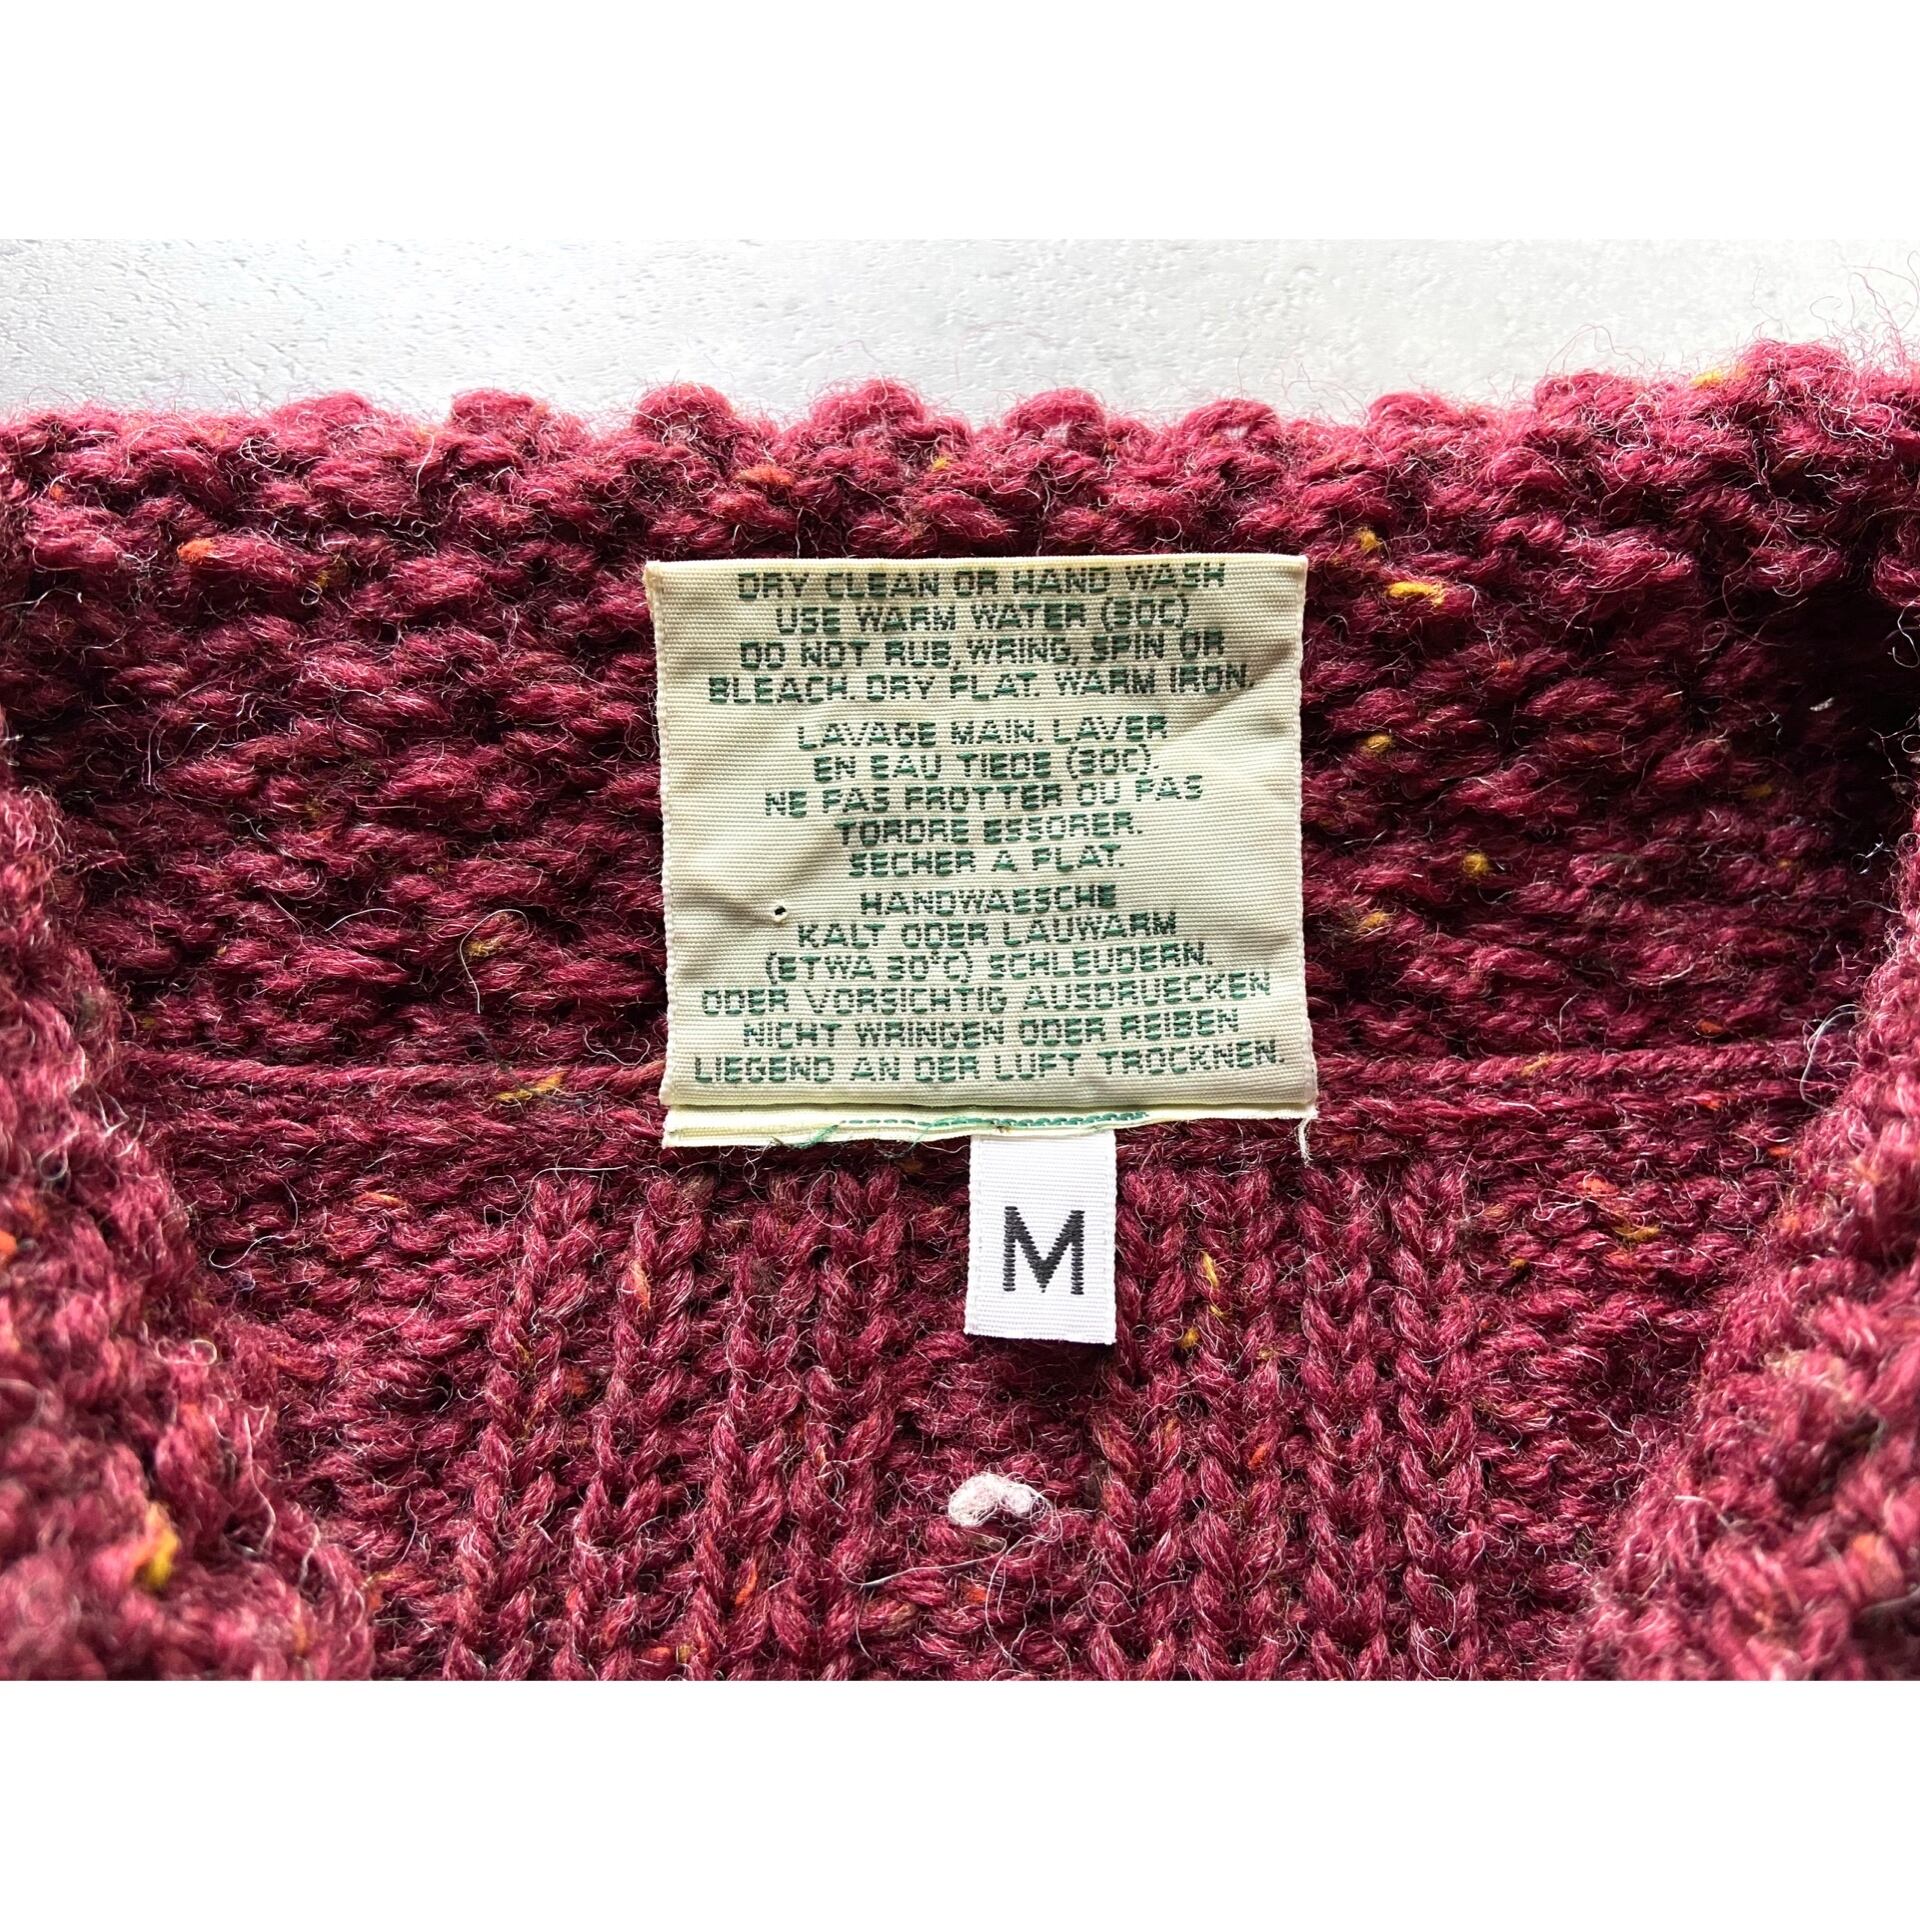 -90s carraig donn alan knit cardigan “Made in IRELAND” キャレイグドン フィッシャーマン  アランニット カーディガン